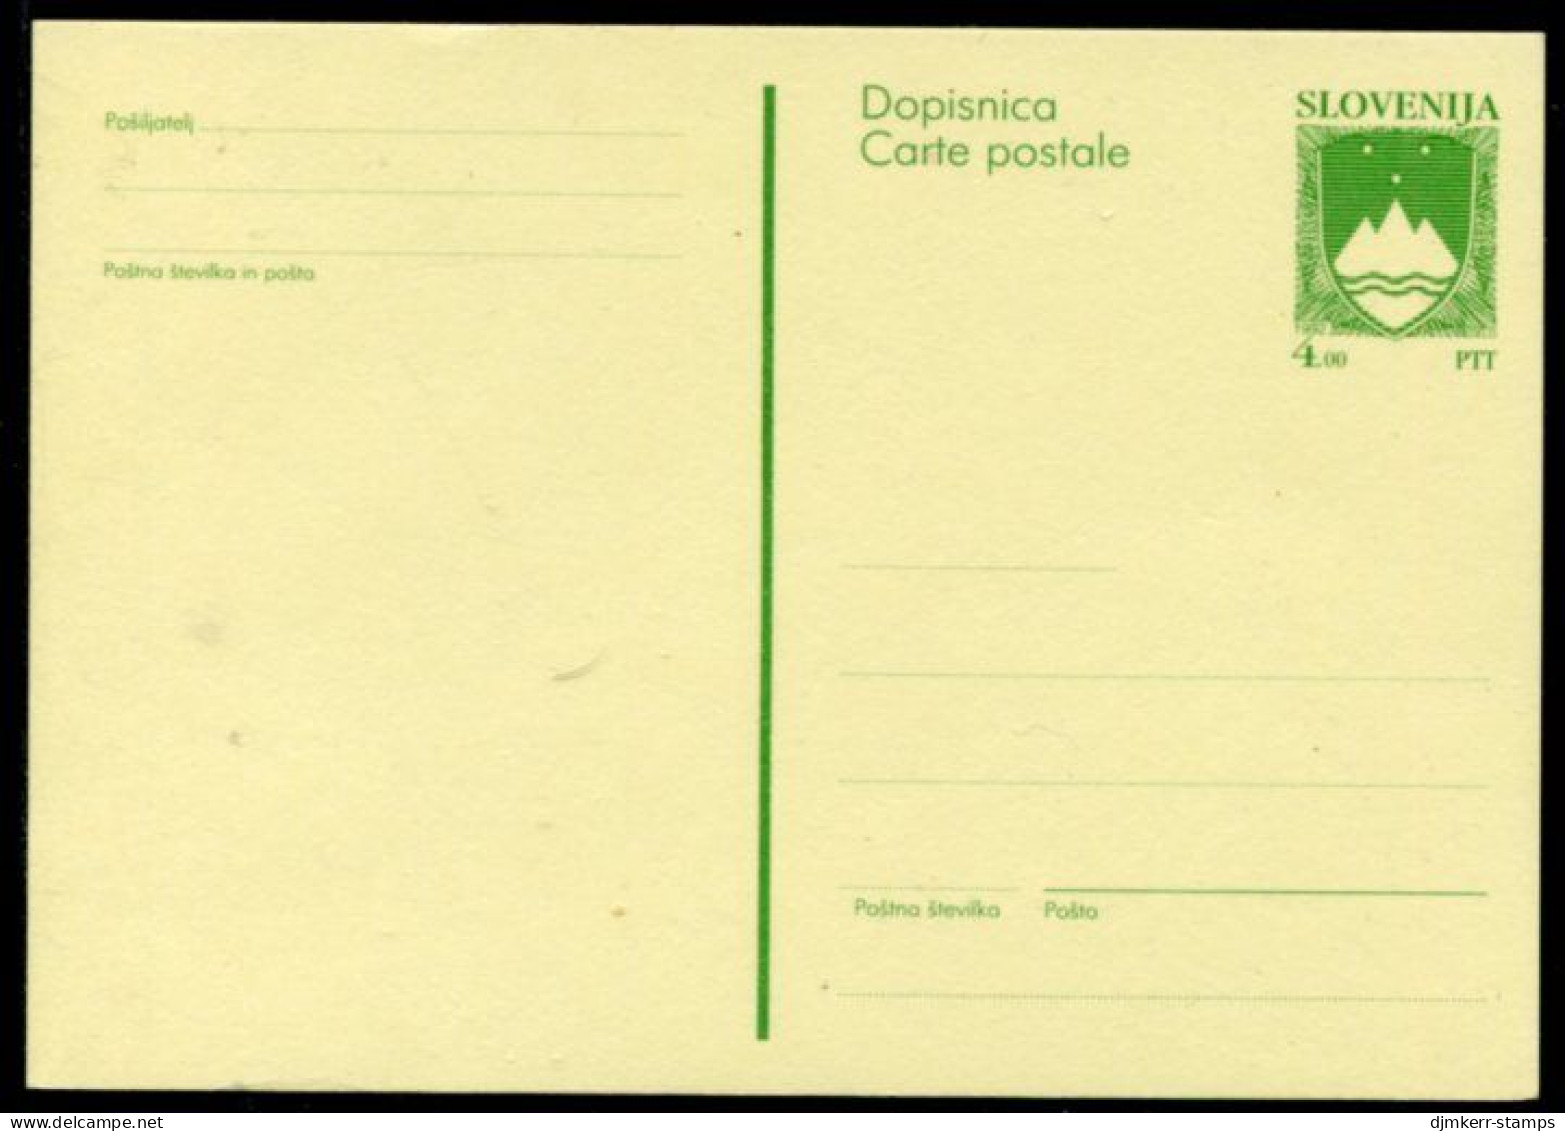 SLOVENIA 1992 4.00 T.  Arms  Stationery Card, Unused.   Michel P1 - Slovenië